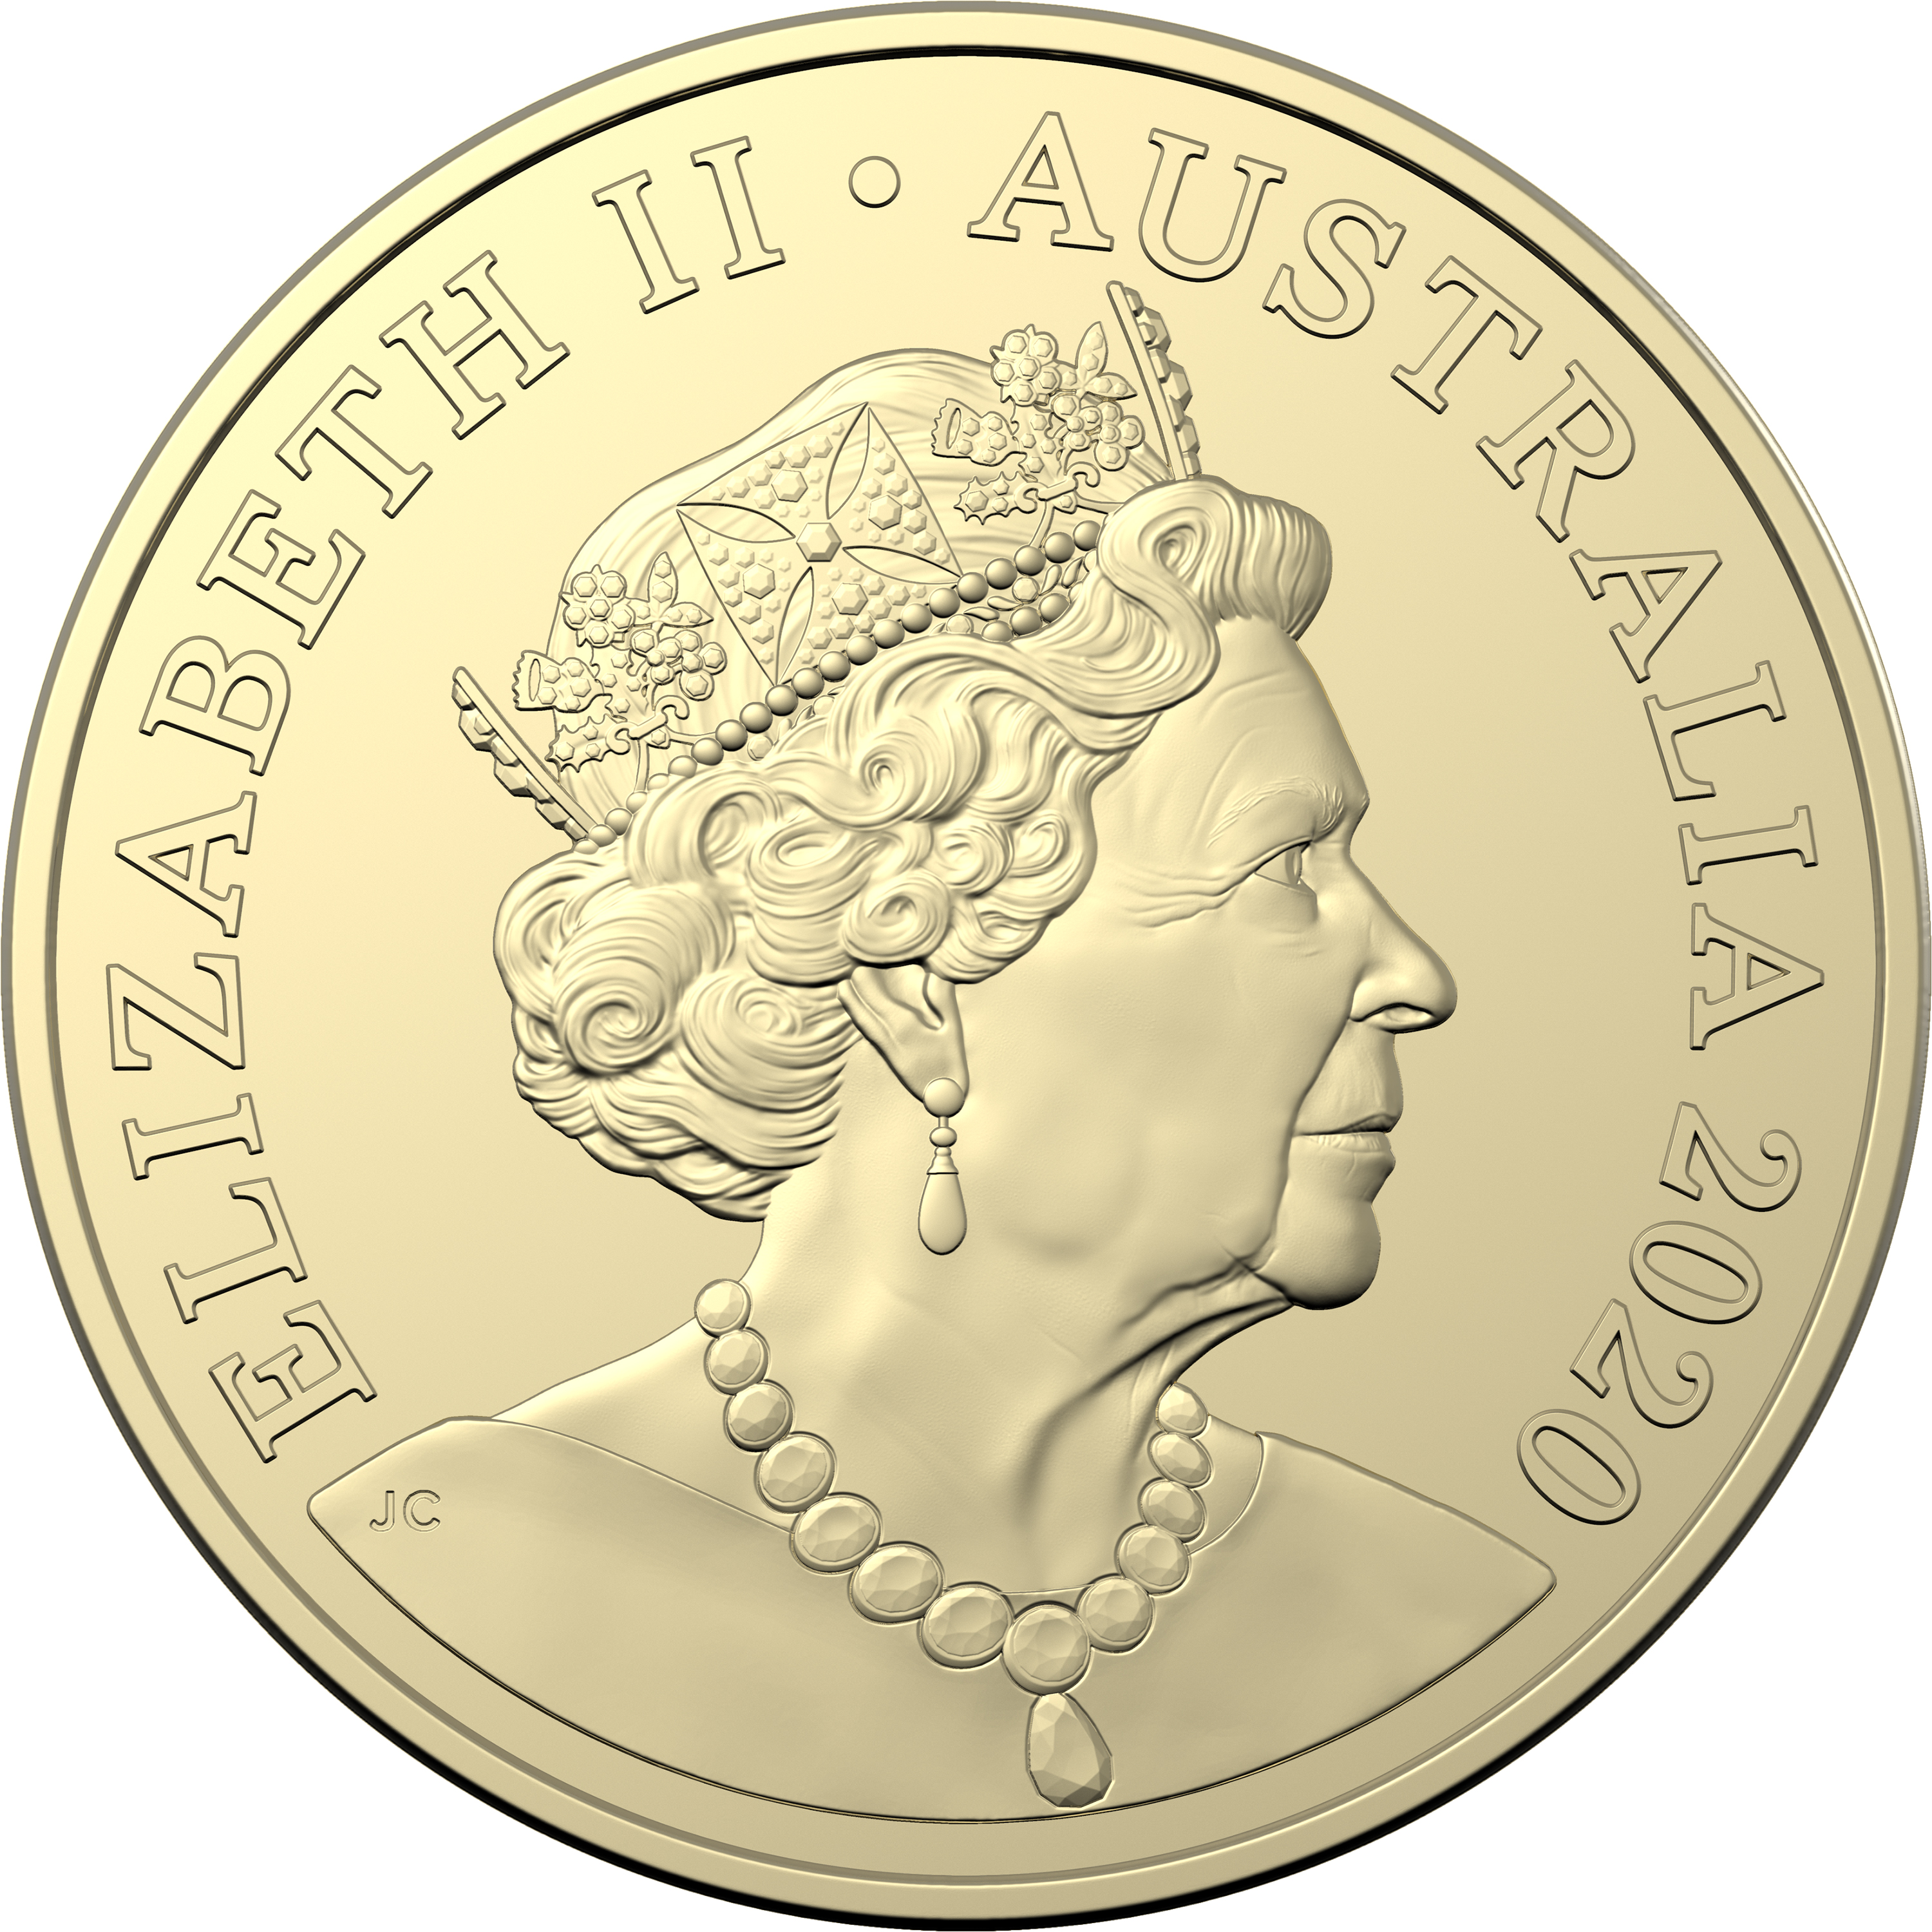 Australian mint celebrates 100th anniversary of QANTAS